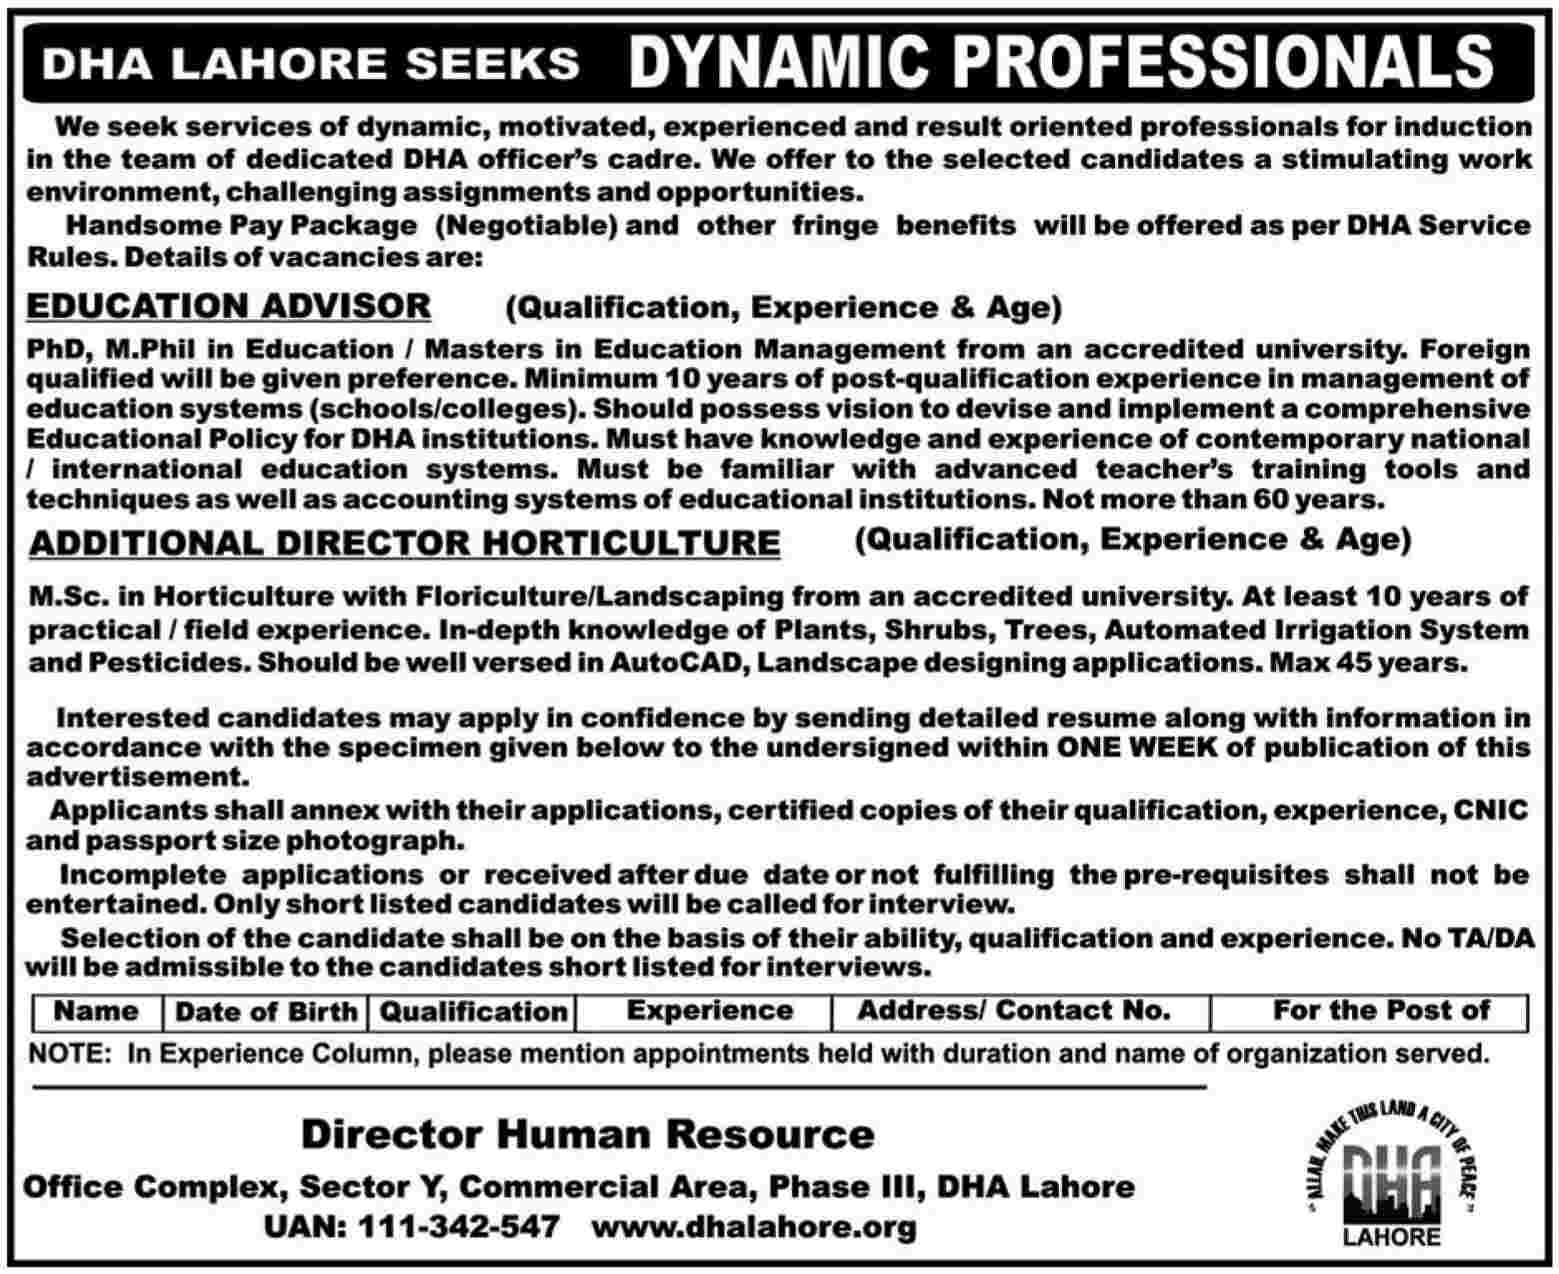 DHA Lahore Seeks Dynamic Professionals